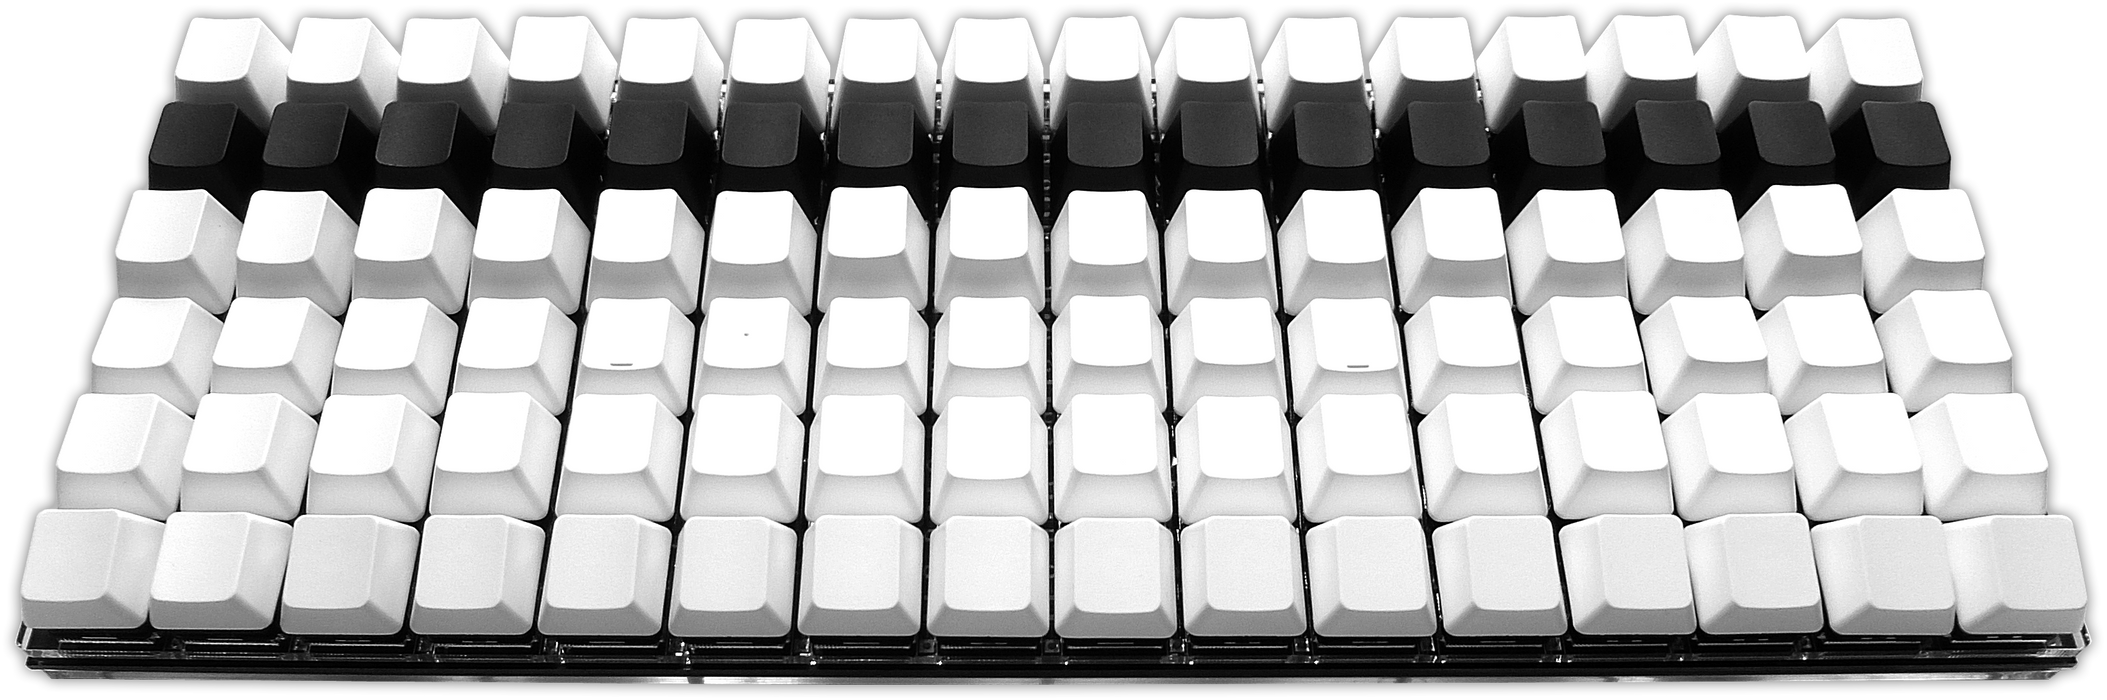 ADKB96 96 Keys BTO Self Made Keyboard Kit ADKB96 